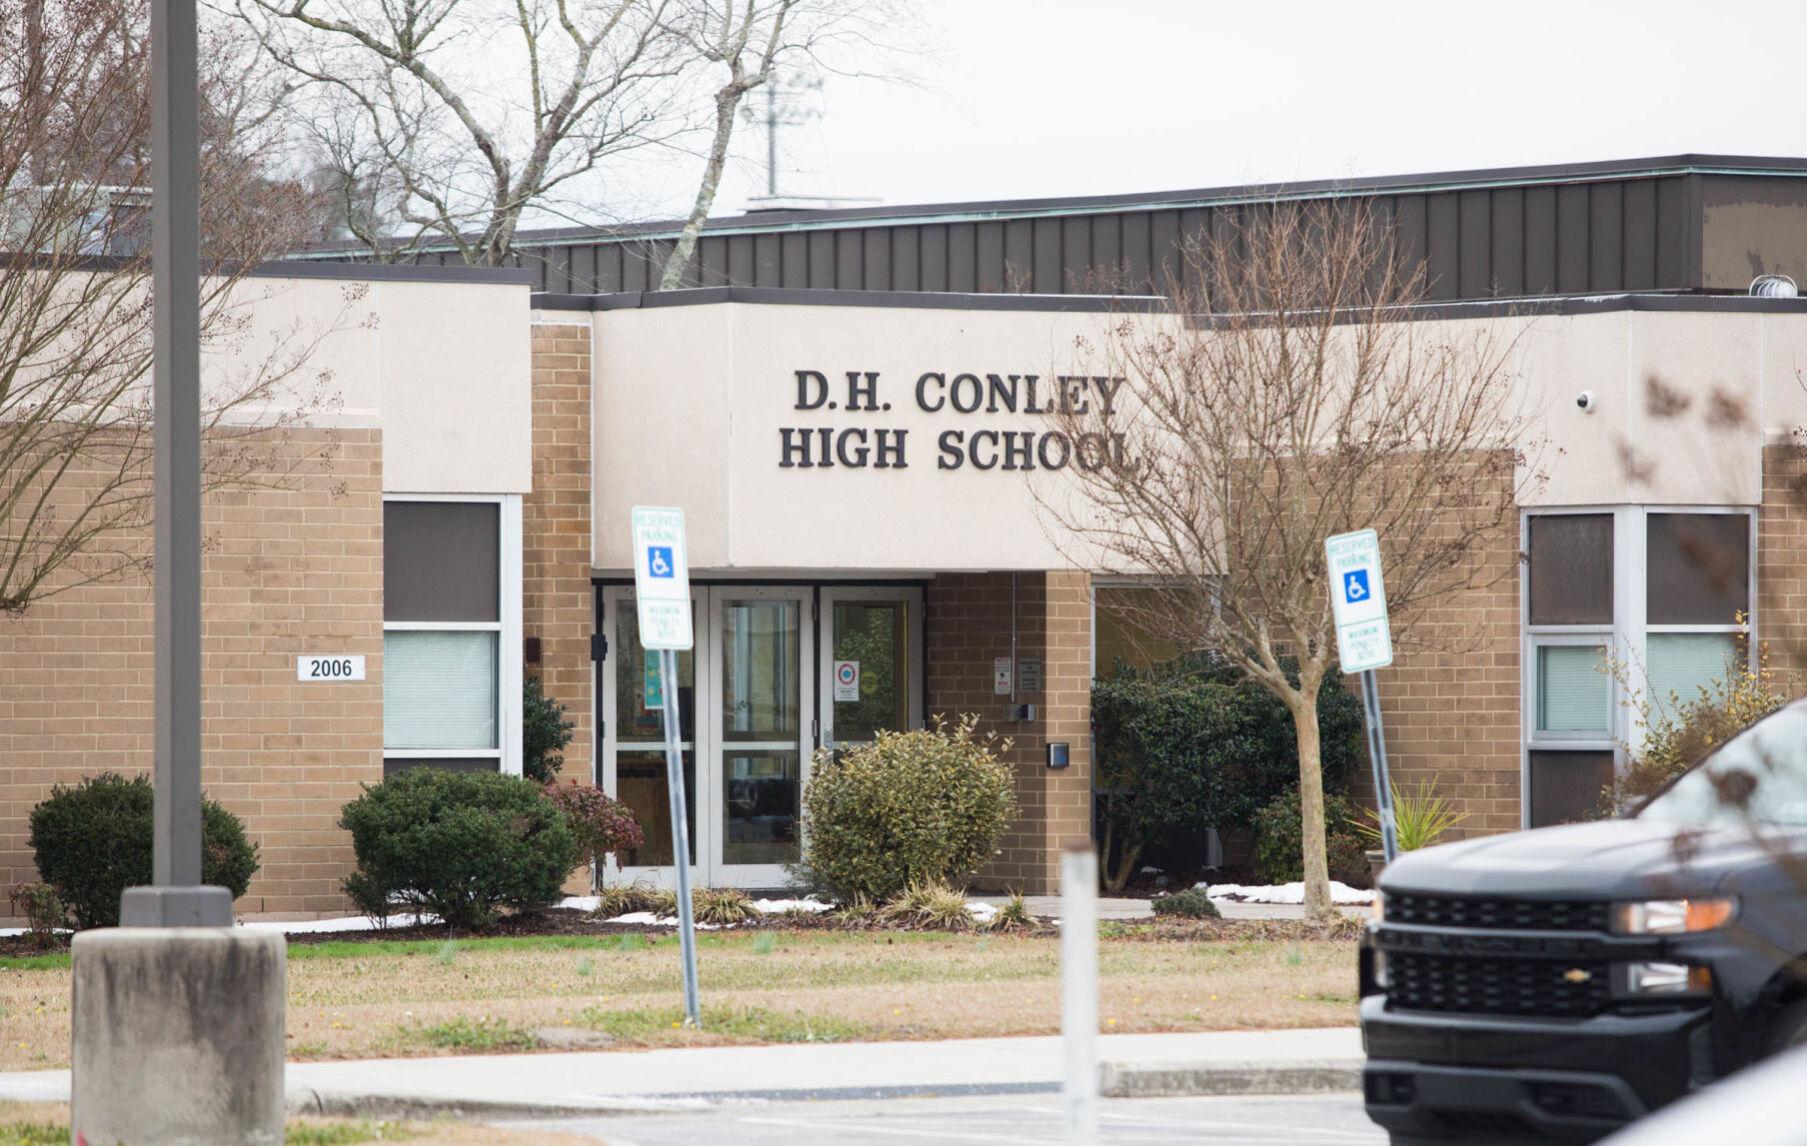 Crowding keeps Conley off Pitt County Schools' open enrollment list